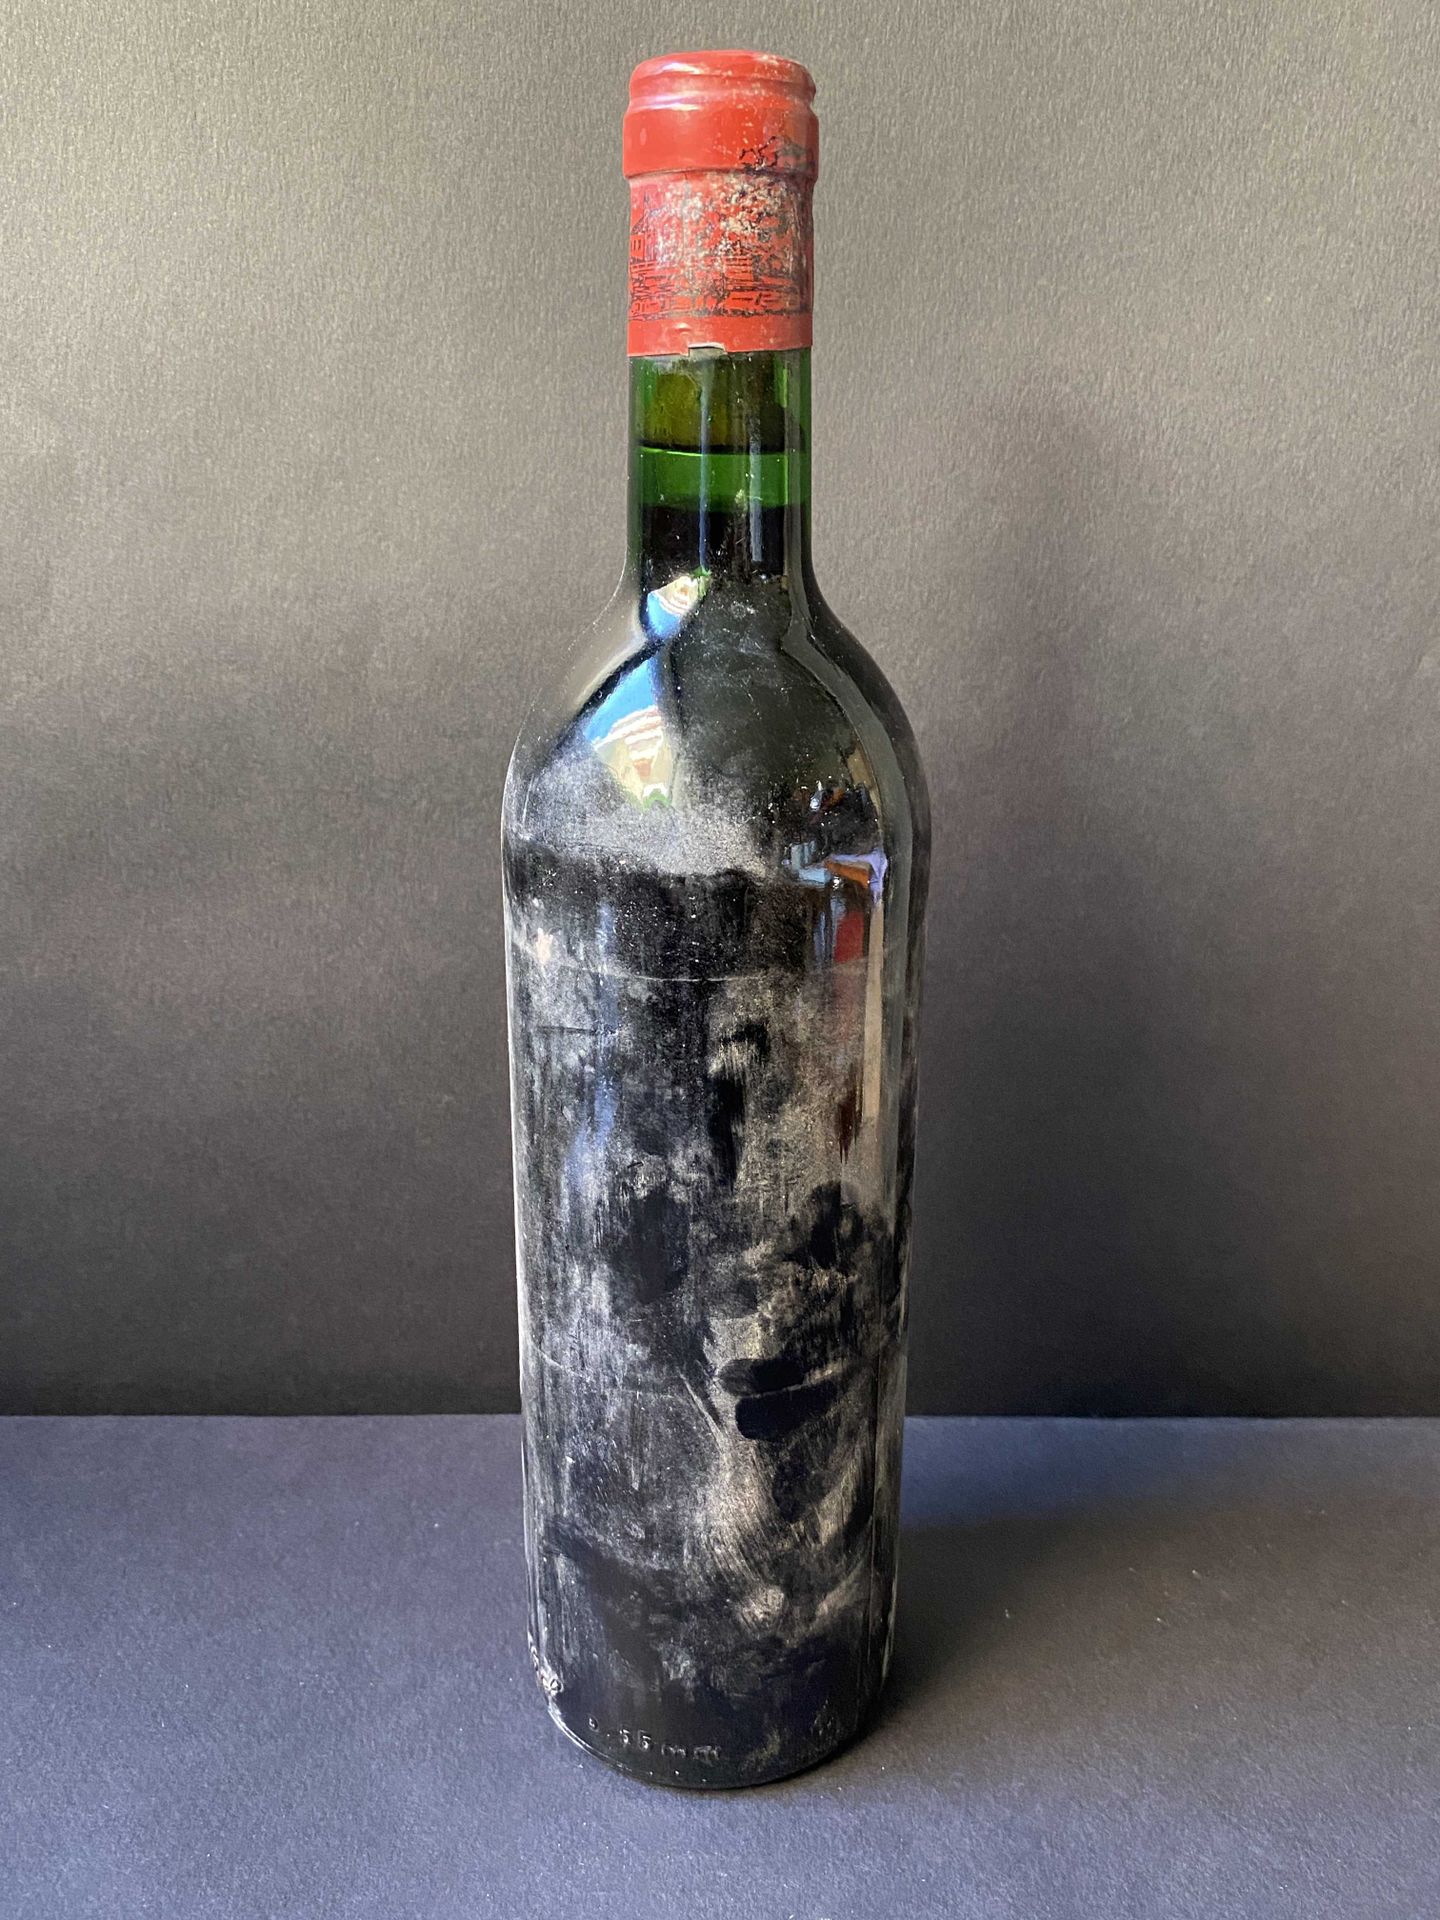 Null 1 botella de Château Lafitte Rothschild

Sin etiqueta